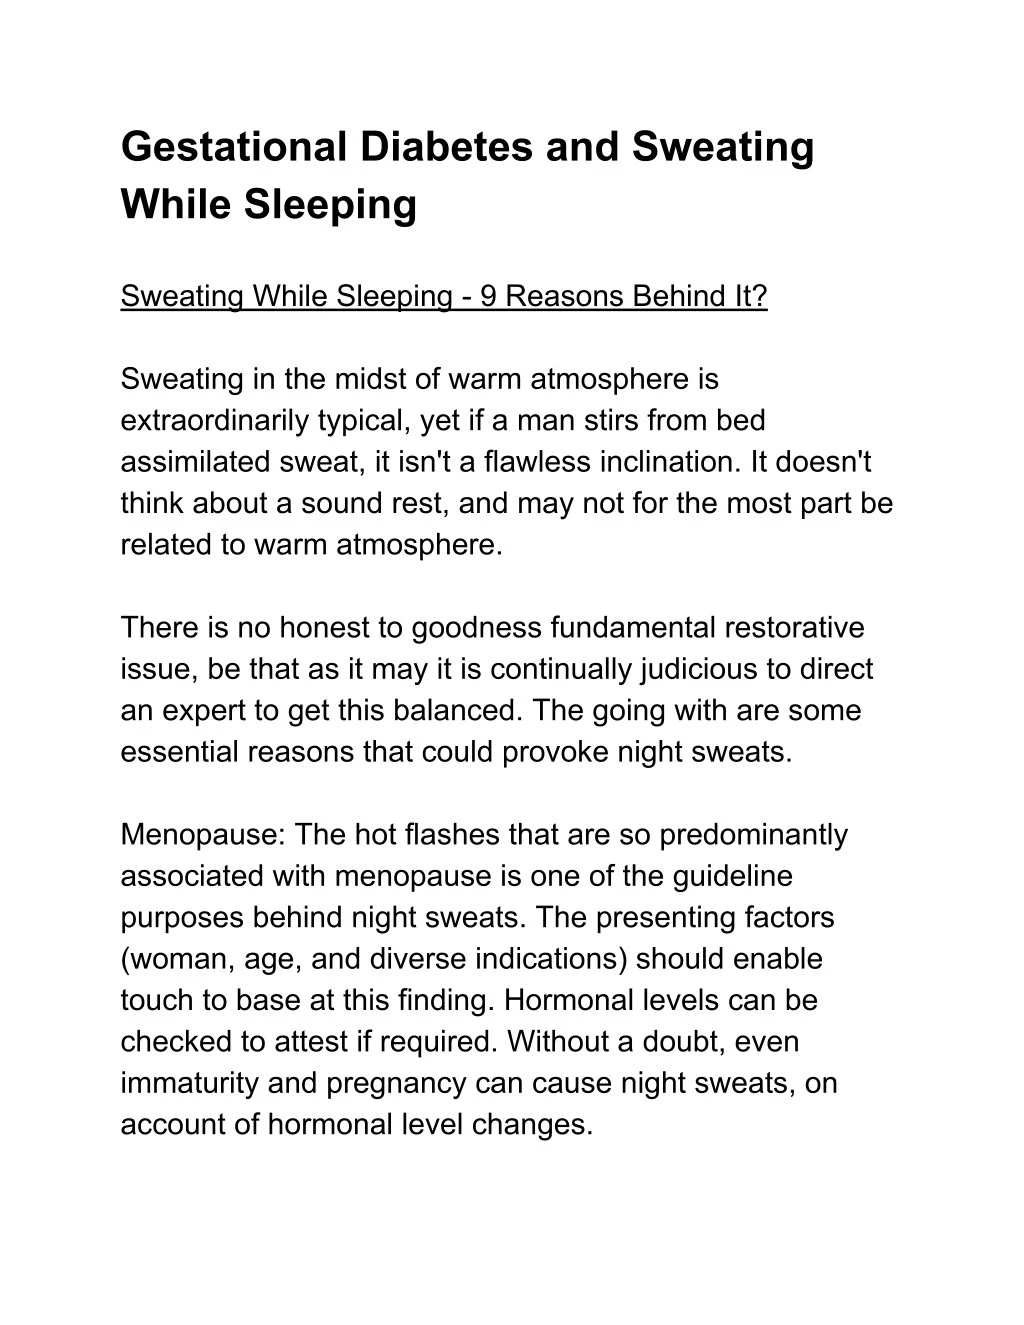 gestational diabetes and sweating while sleeping